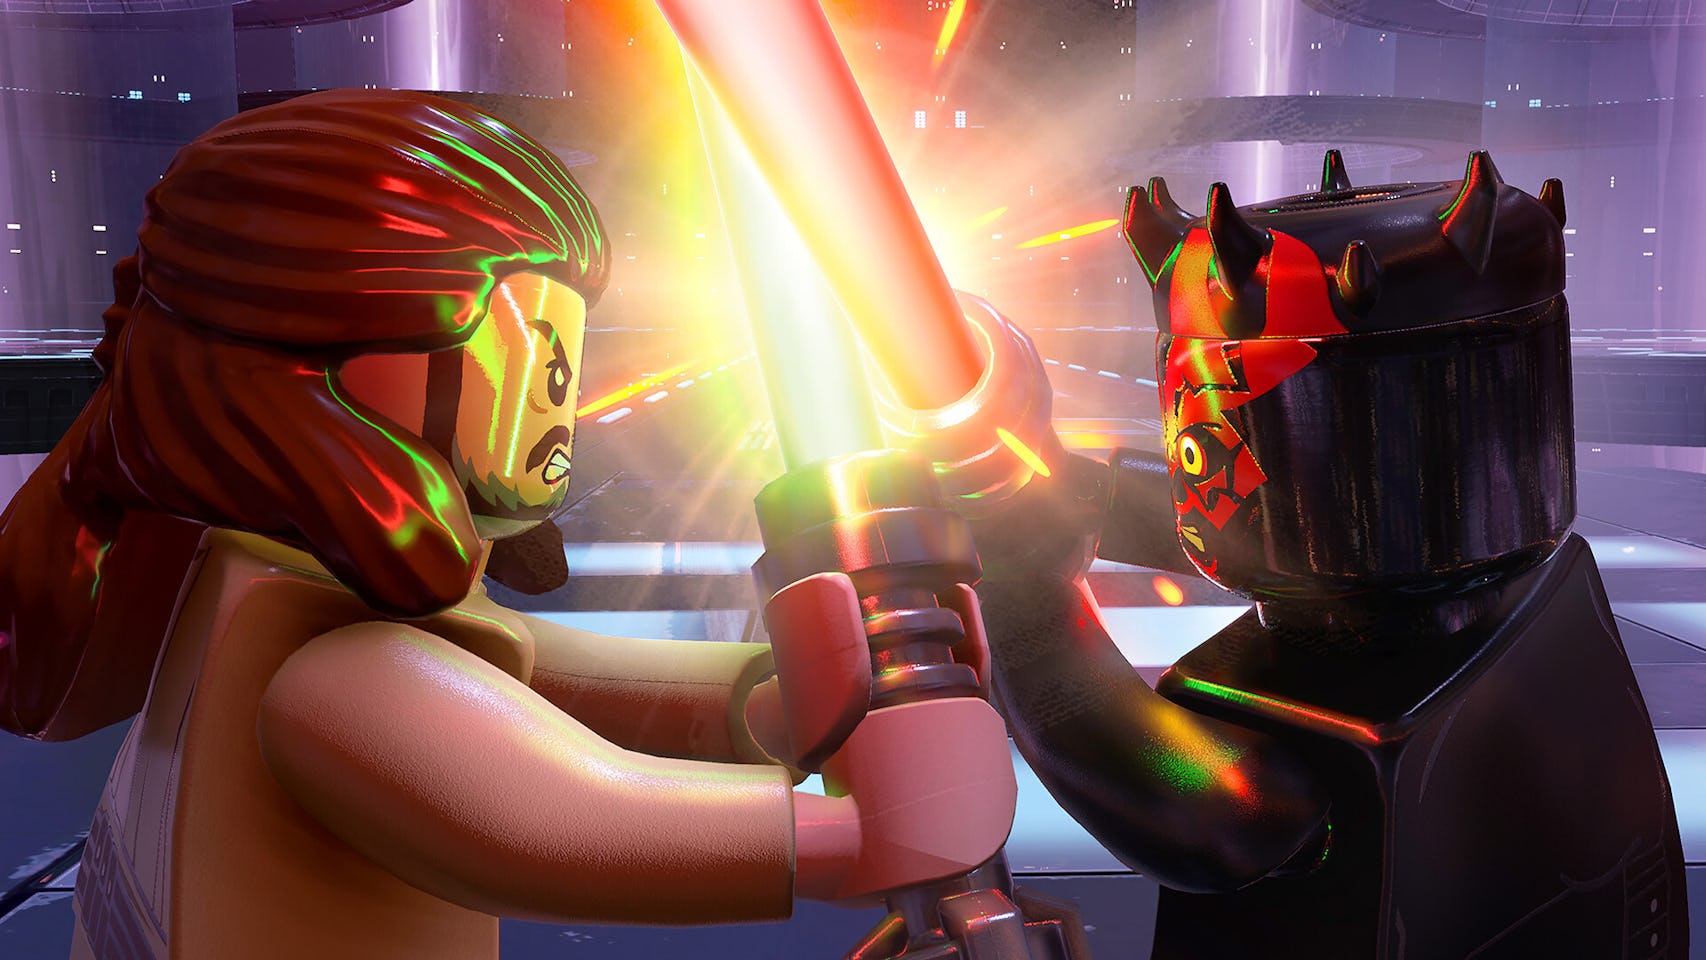 LEGO Star Wars: The Skywalker Saga is a comfy co-op collectathon